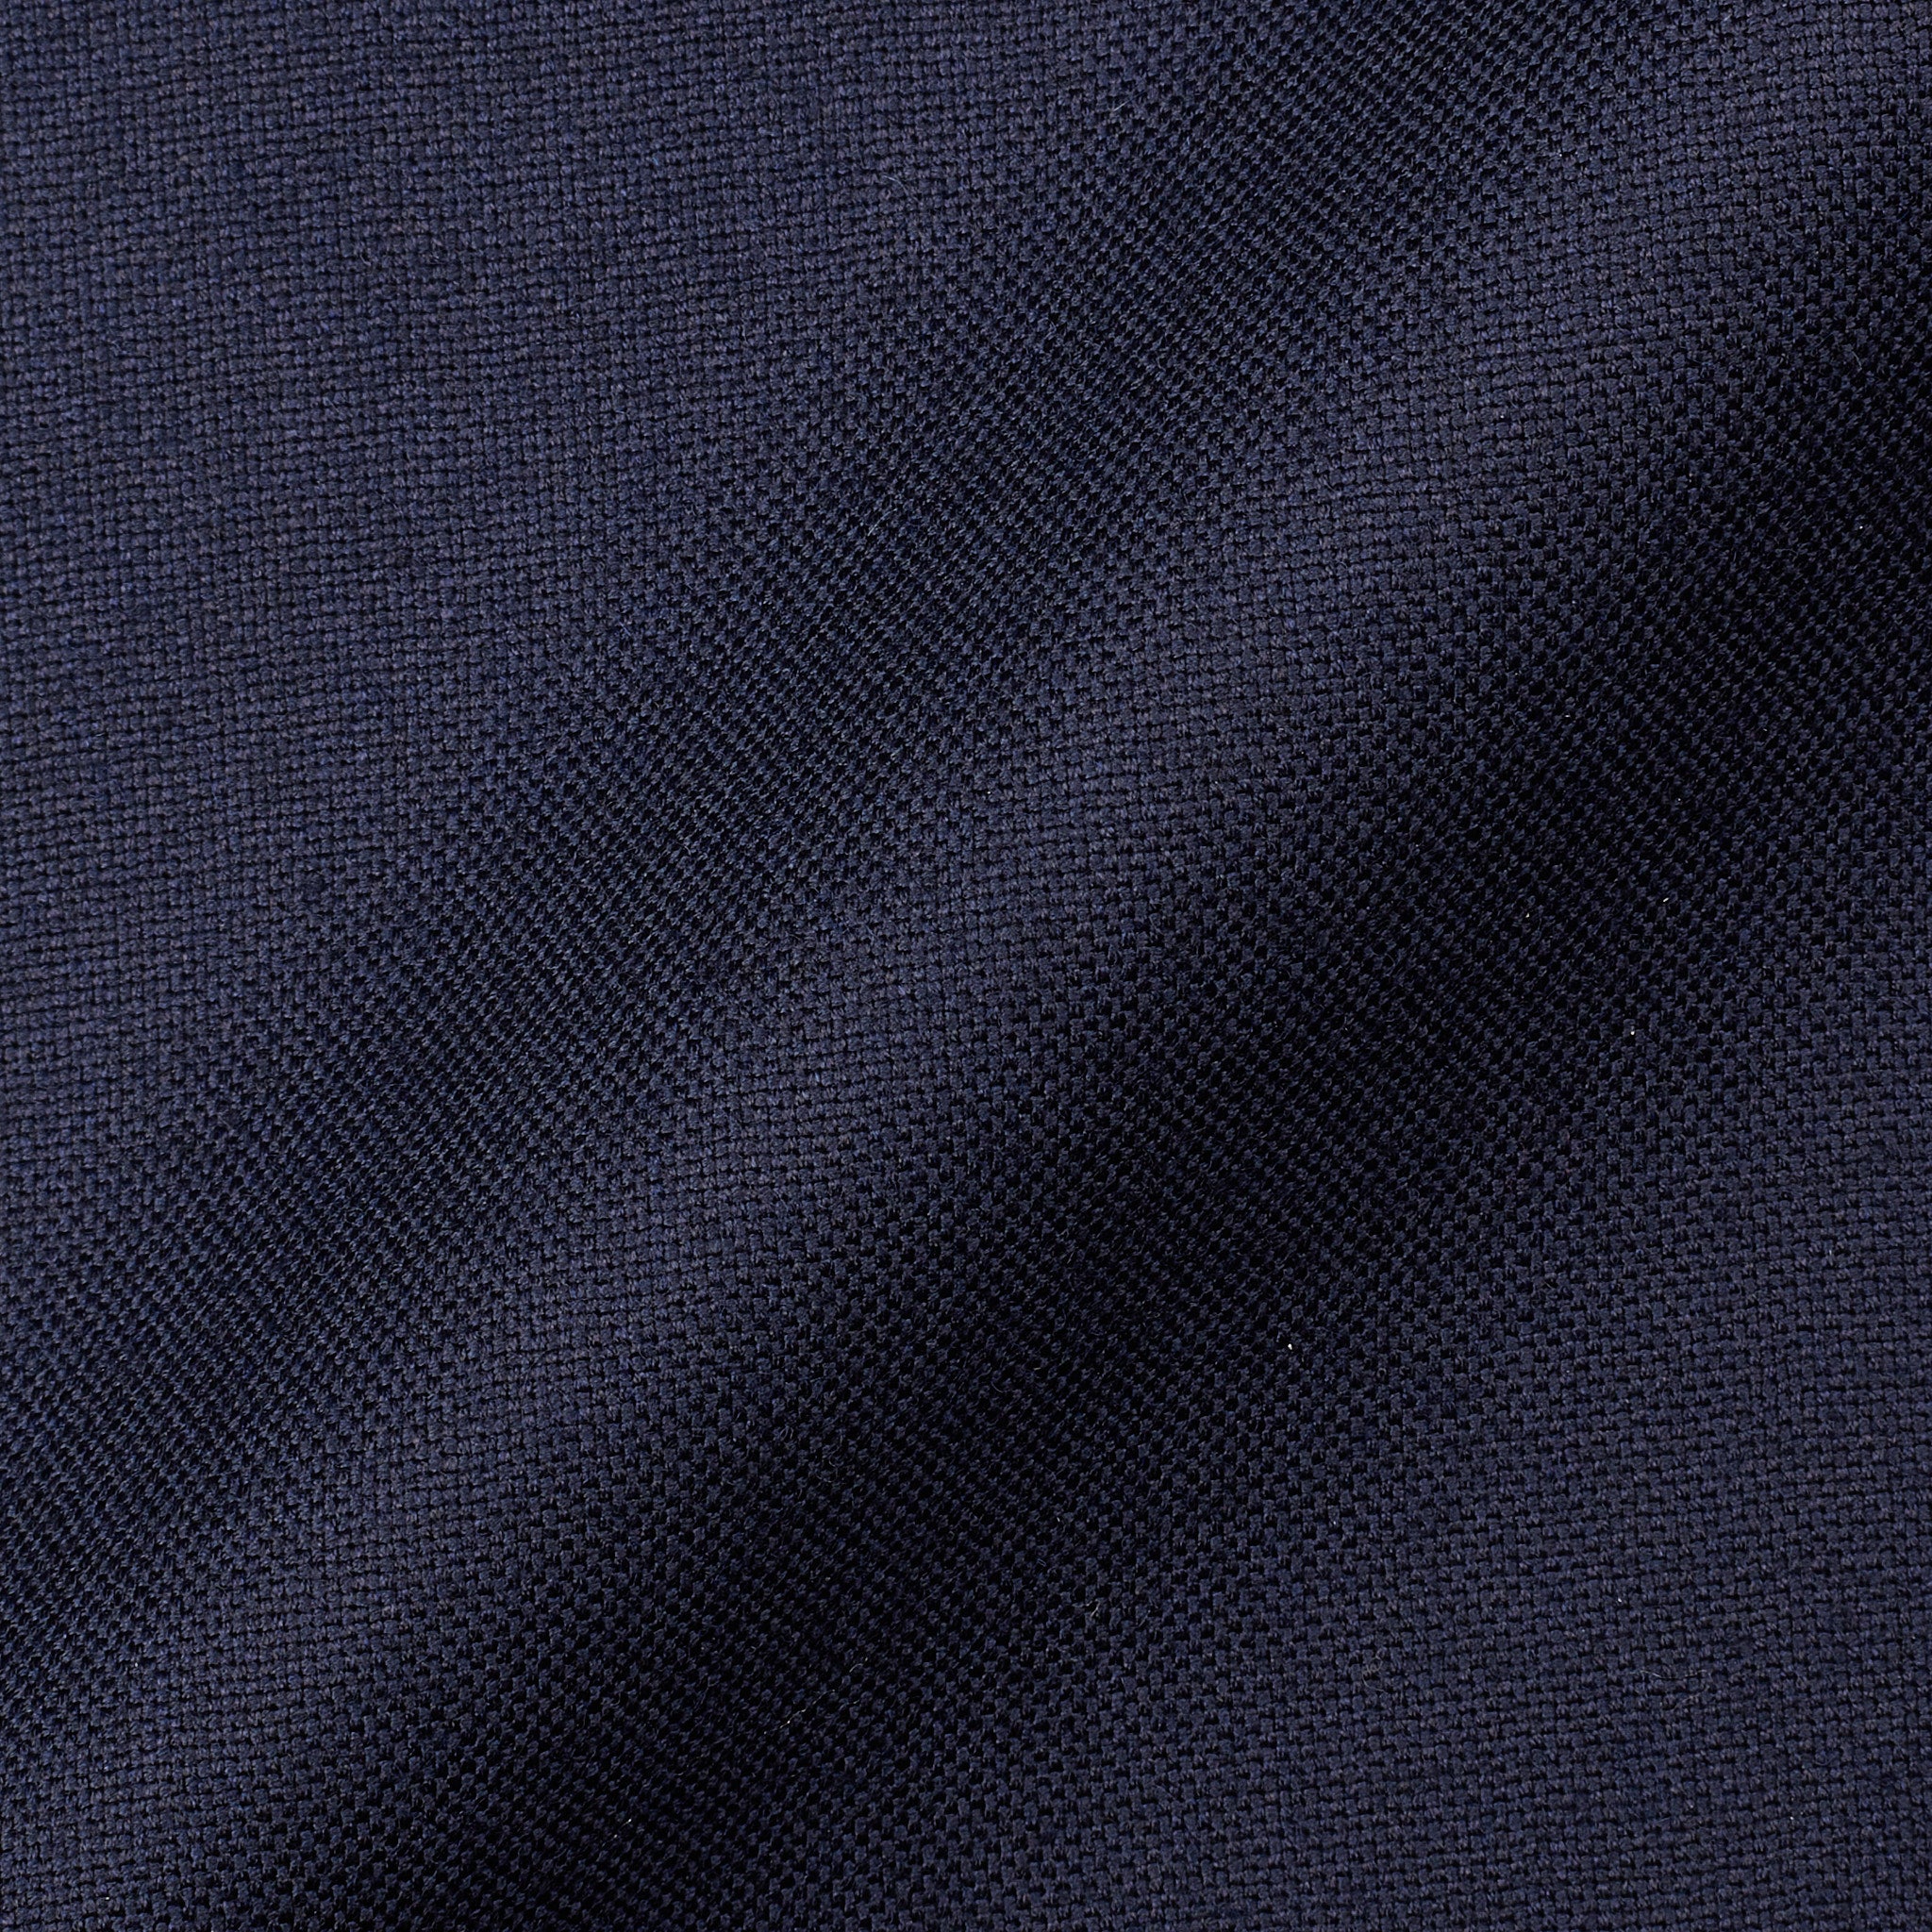 Sartoria CHIAIA Bespoke Handmade Navy Blue Wool Jacket EU 50 NEW US 40 SARTORIA CHIAIA